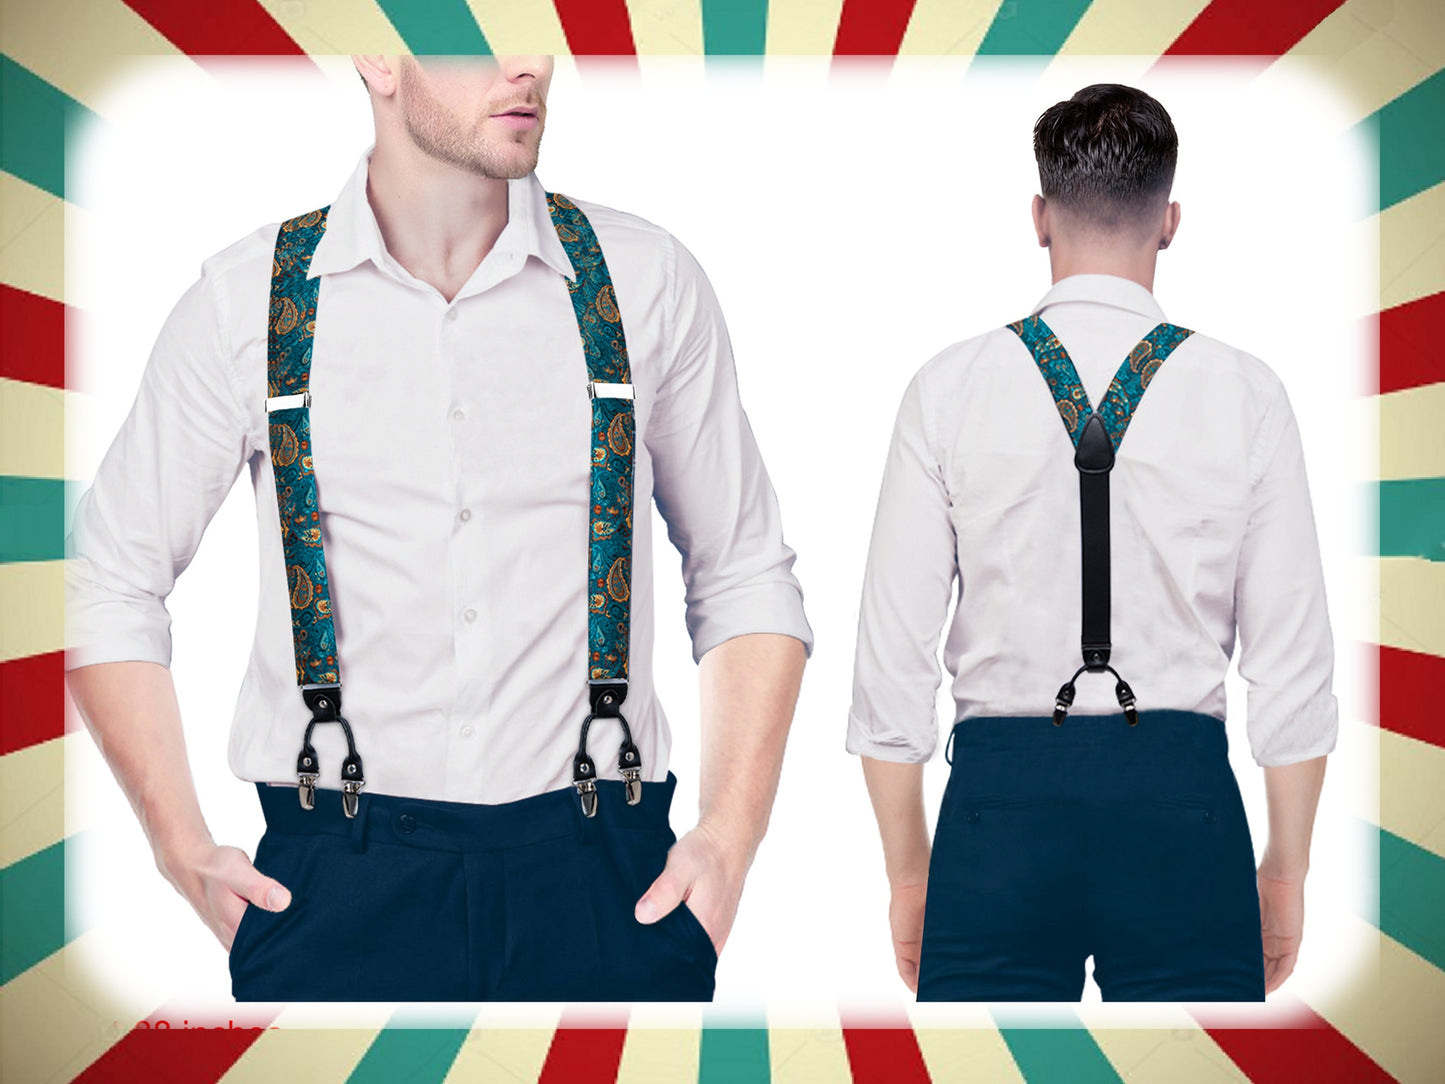 BD4004 Men's Braces Designer Clip Suspender Set [Paisley Teal]